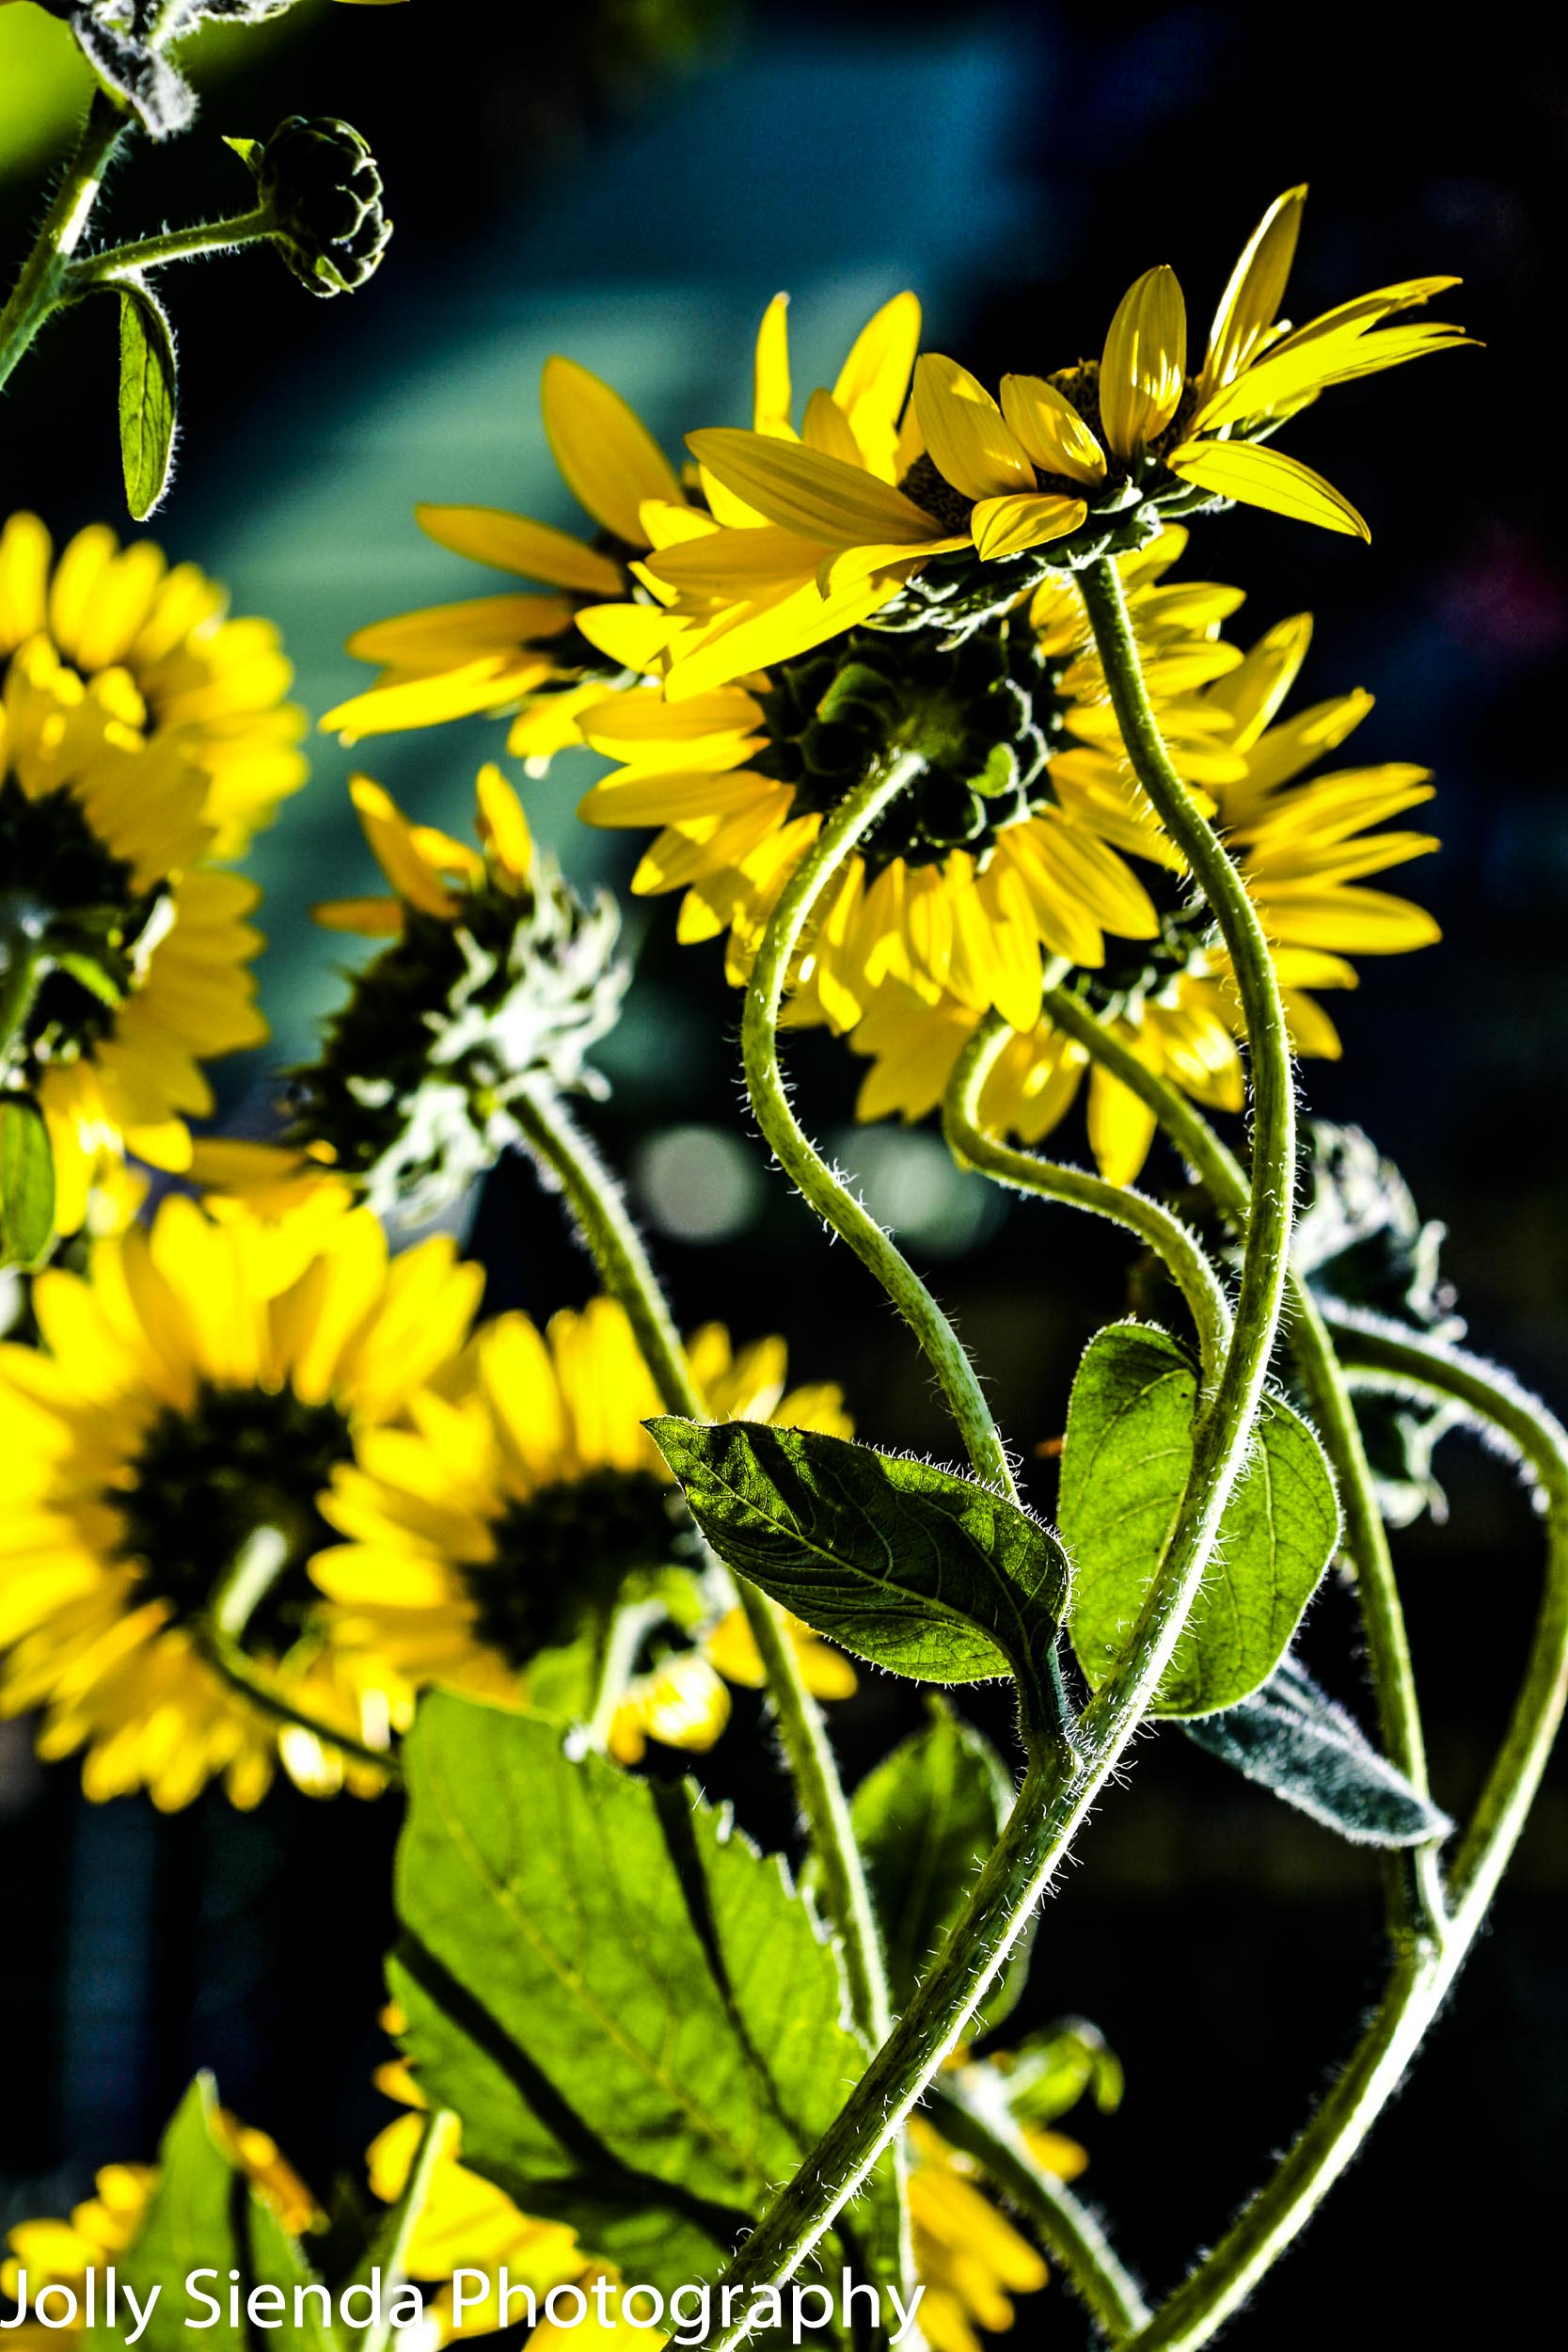 Sunflowers dance in the sunlight